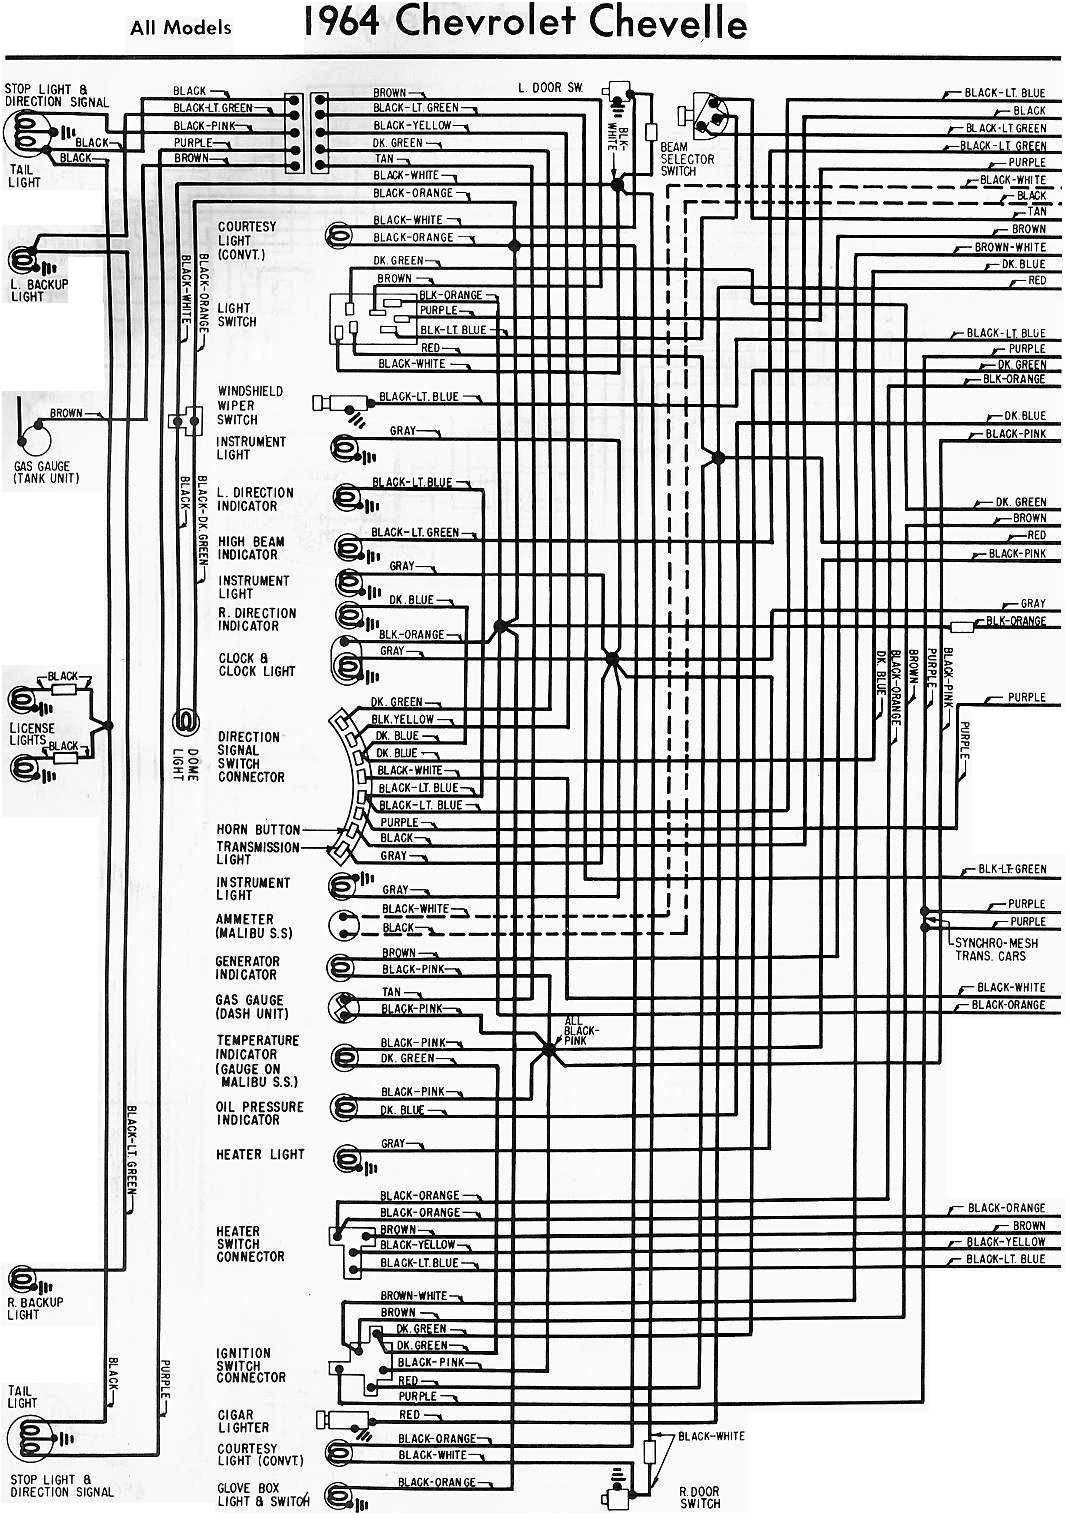 1971 Chevelle Wiring Diagram Pdf from 3.bp.blogspot.com